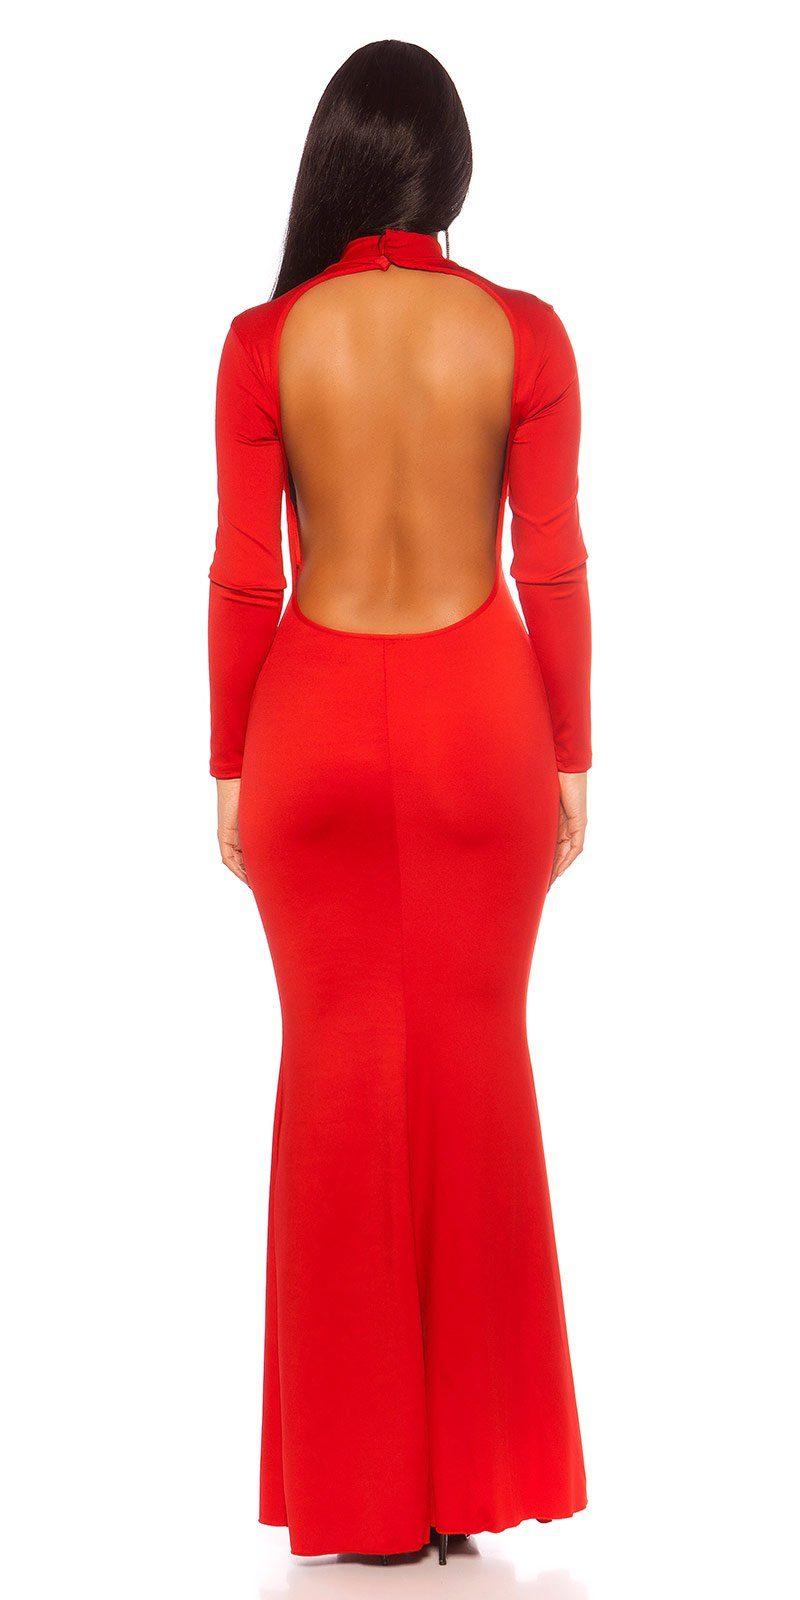 Koucla mit rot Maxikleid, hochgschlossen Abendkleid elegantes Rückenausschnitt